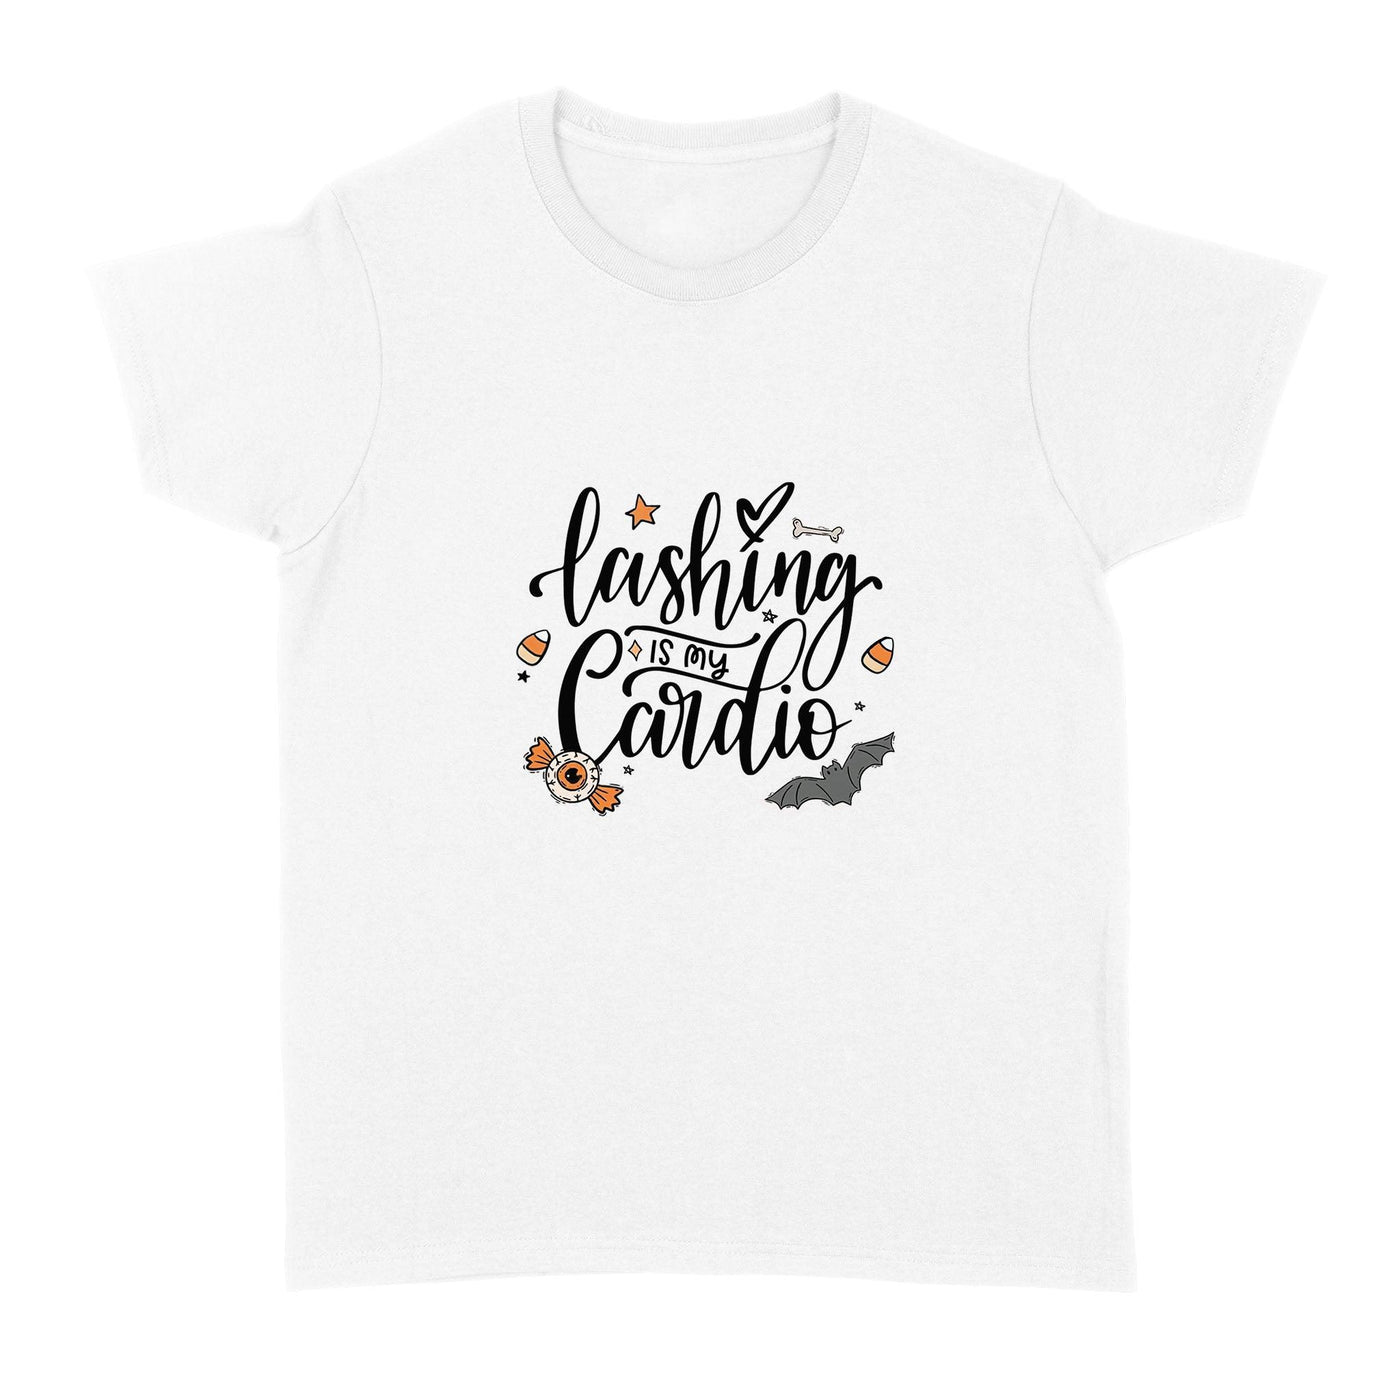 Lashing is my cardio Standard Women's T-shirt - Eyesy Lash